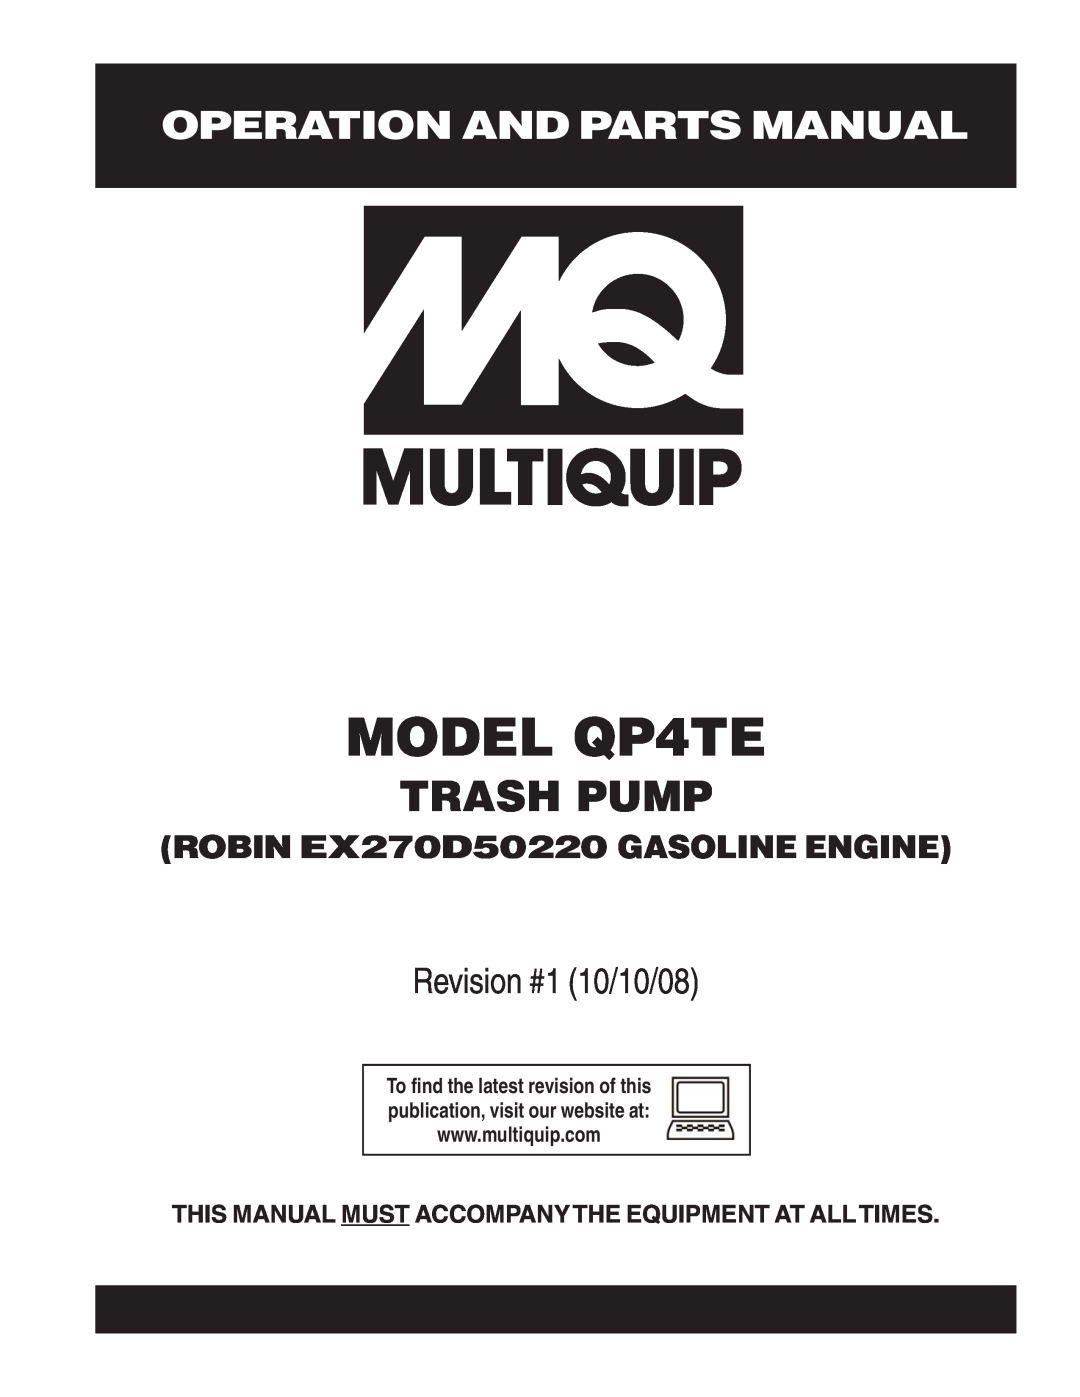 Multiquip manual Operation And Parts Manual, MODEL QP4TE, Trash Pump, Revision #1 10/10/08 